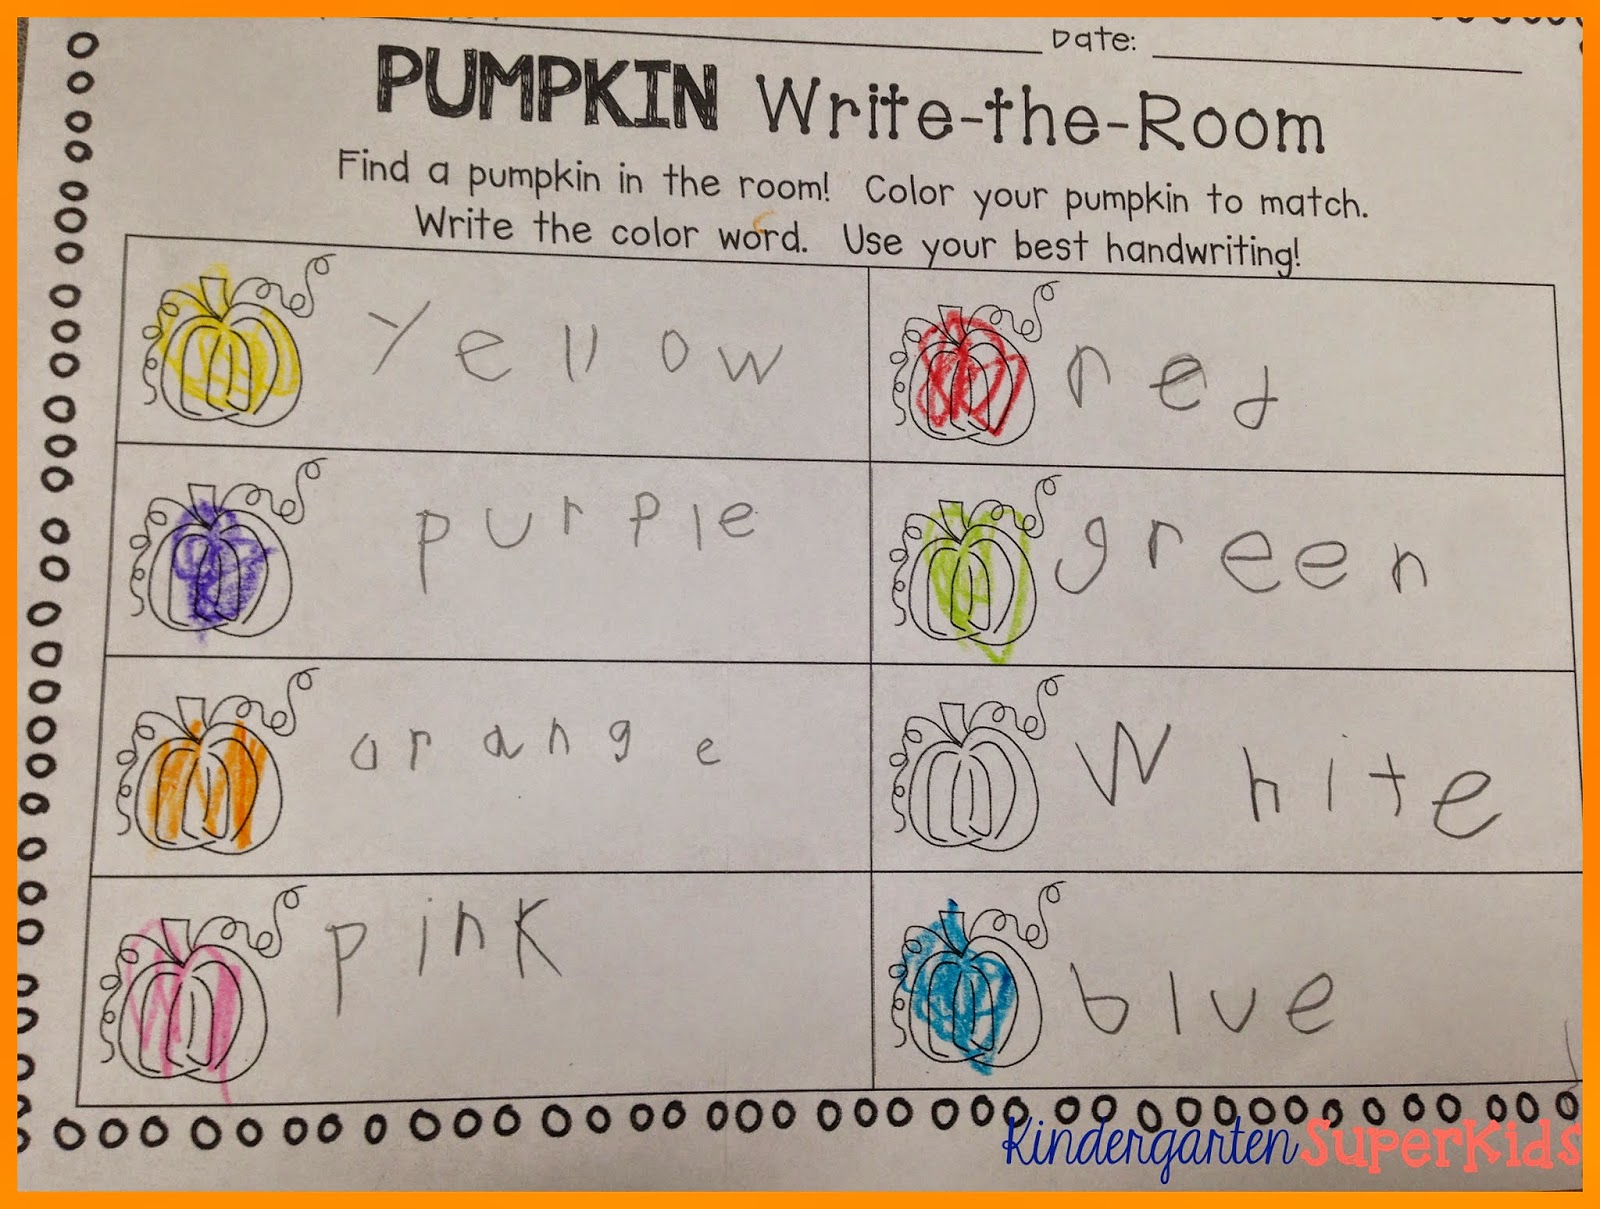 http://www.teacherspayteachers.com/Product/Pumpkin-Color-Words-Write-the-Room-1510380